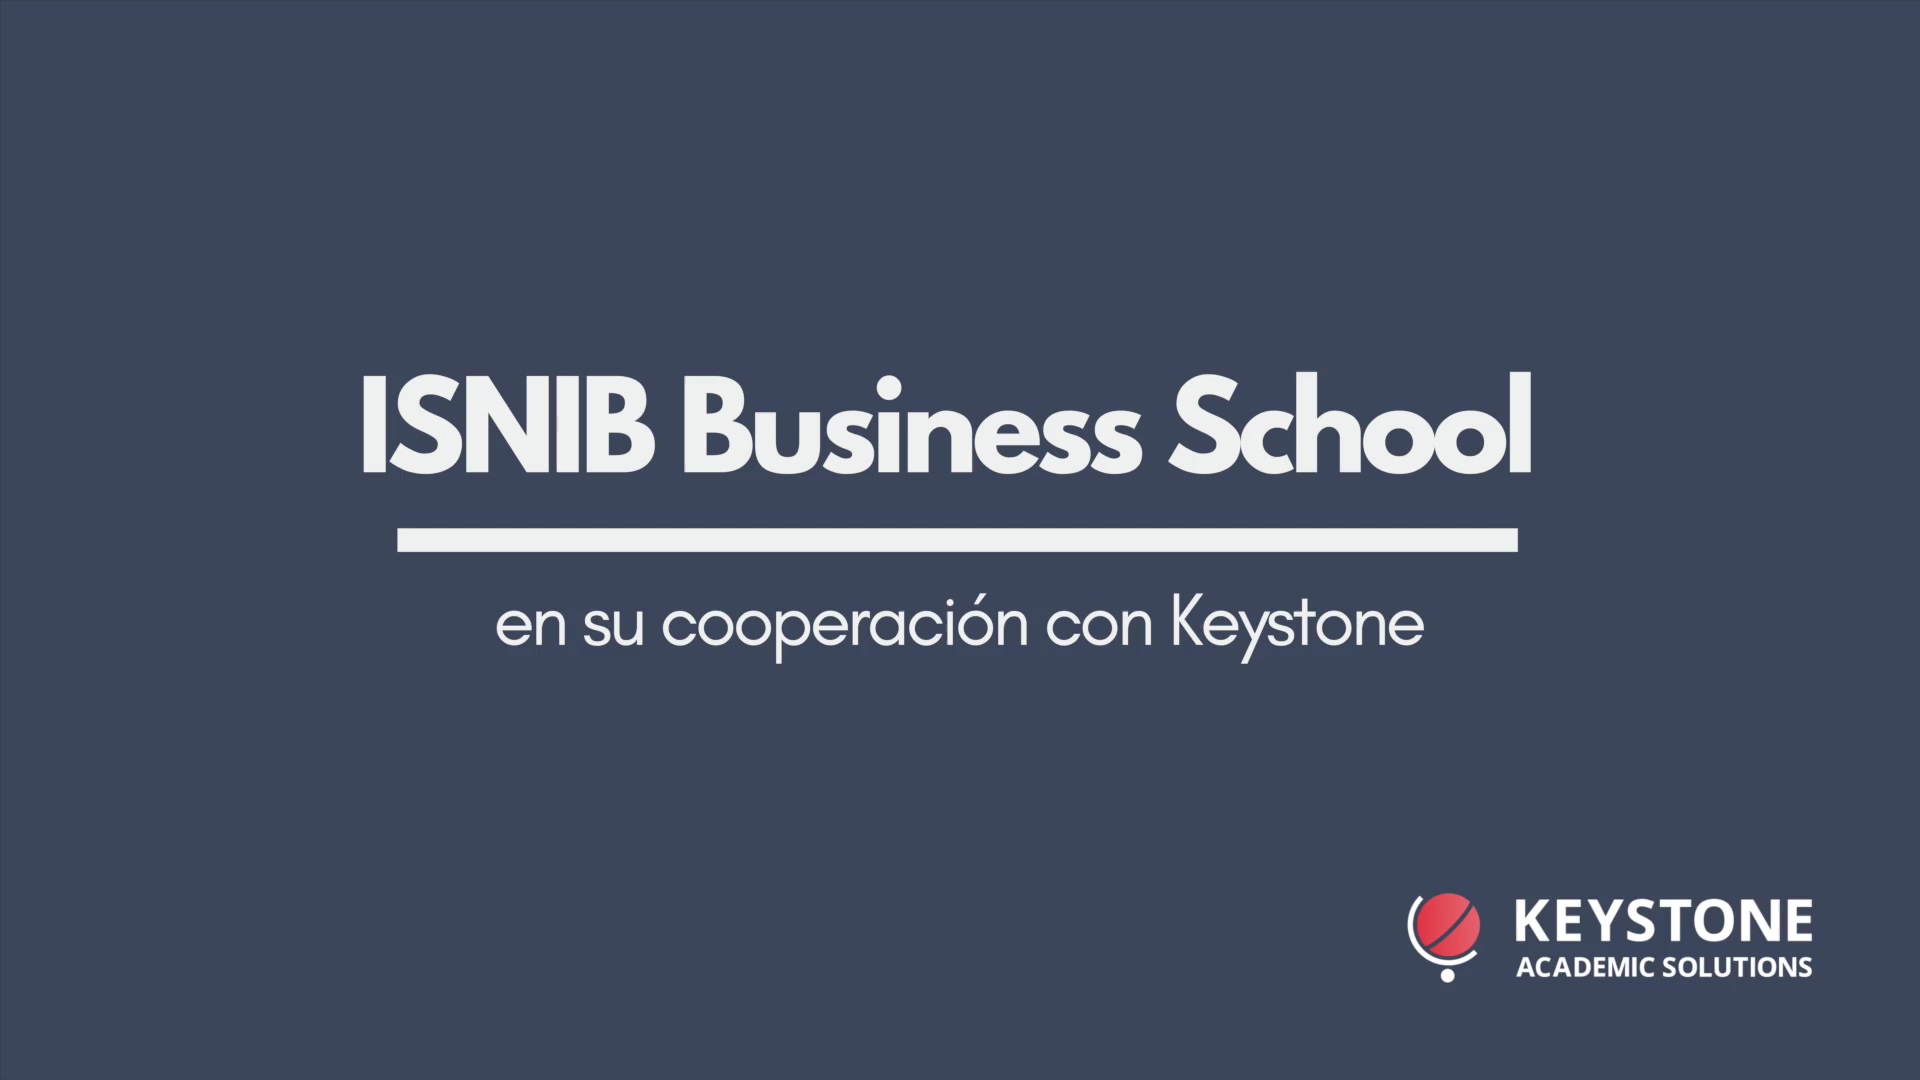 Keystone Video Testimonial - ISNIB Business School